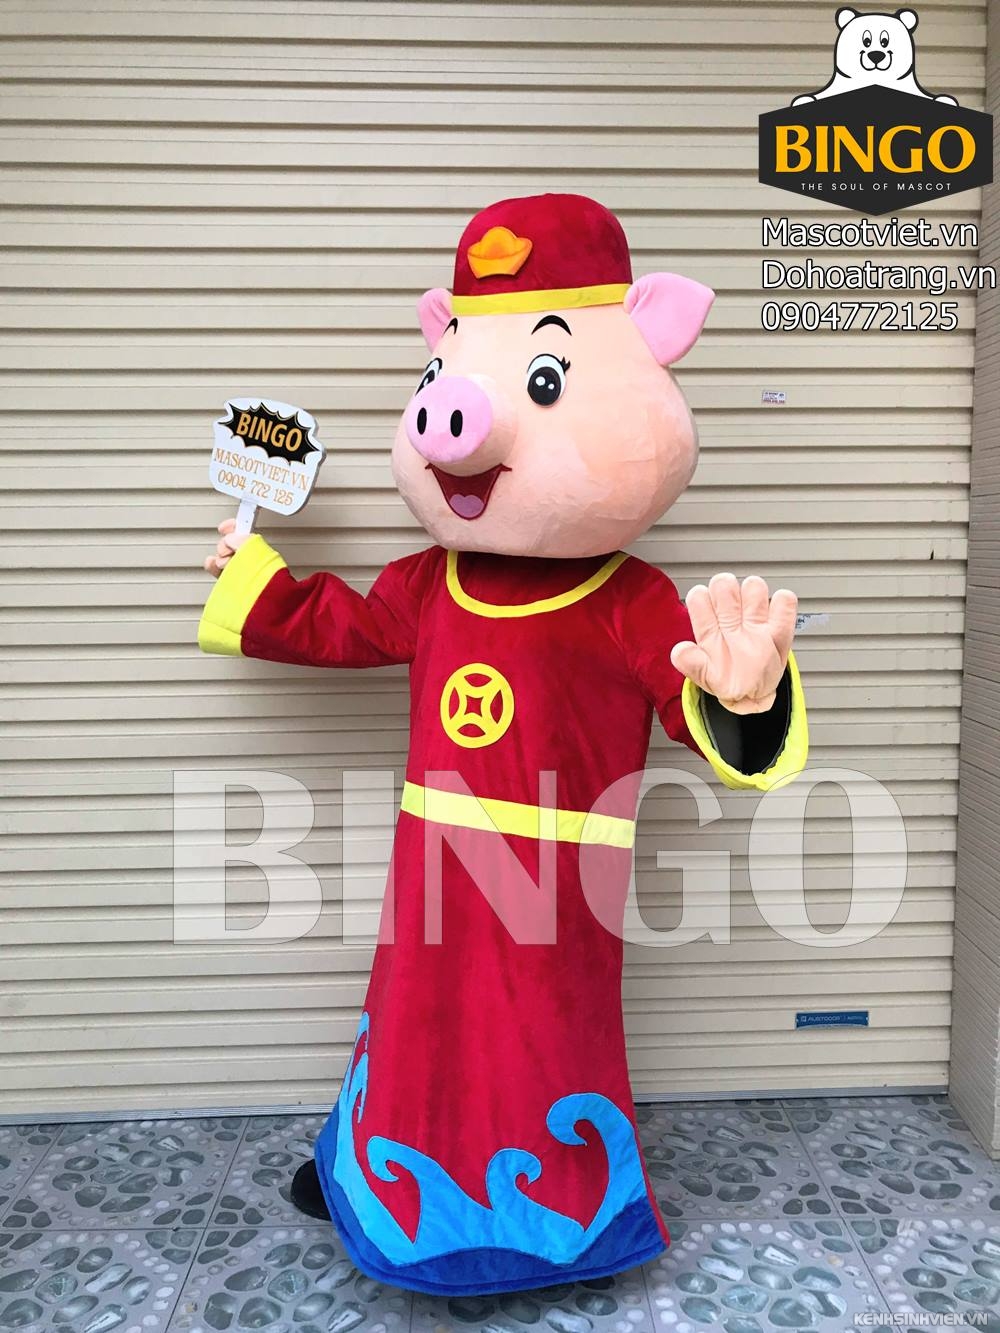 mascot-heo-than-tai-nu-bingo-costumes-0904772125-2-.jpg